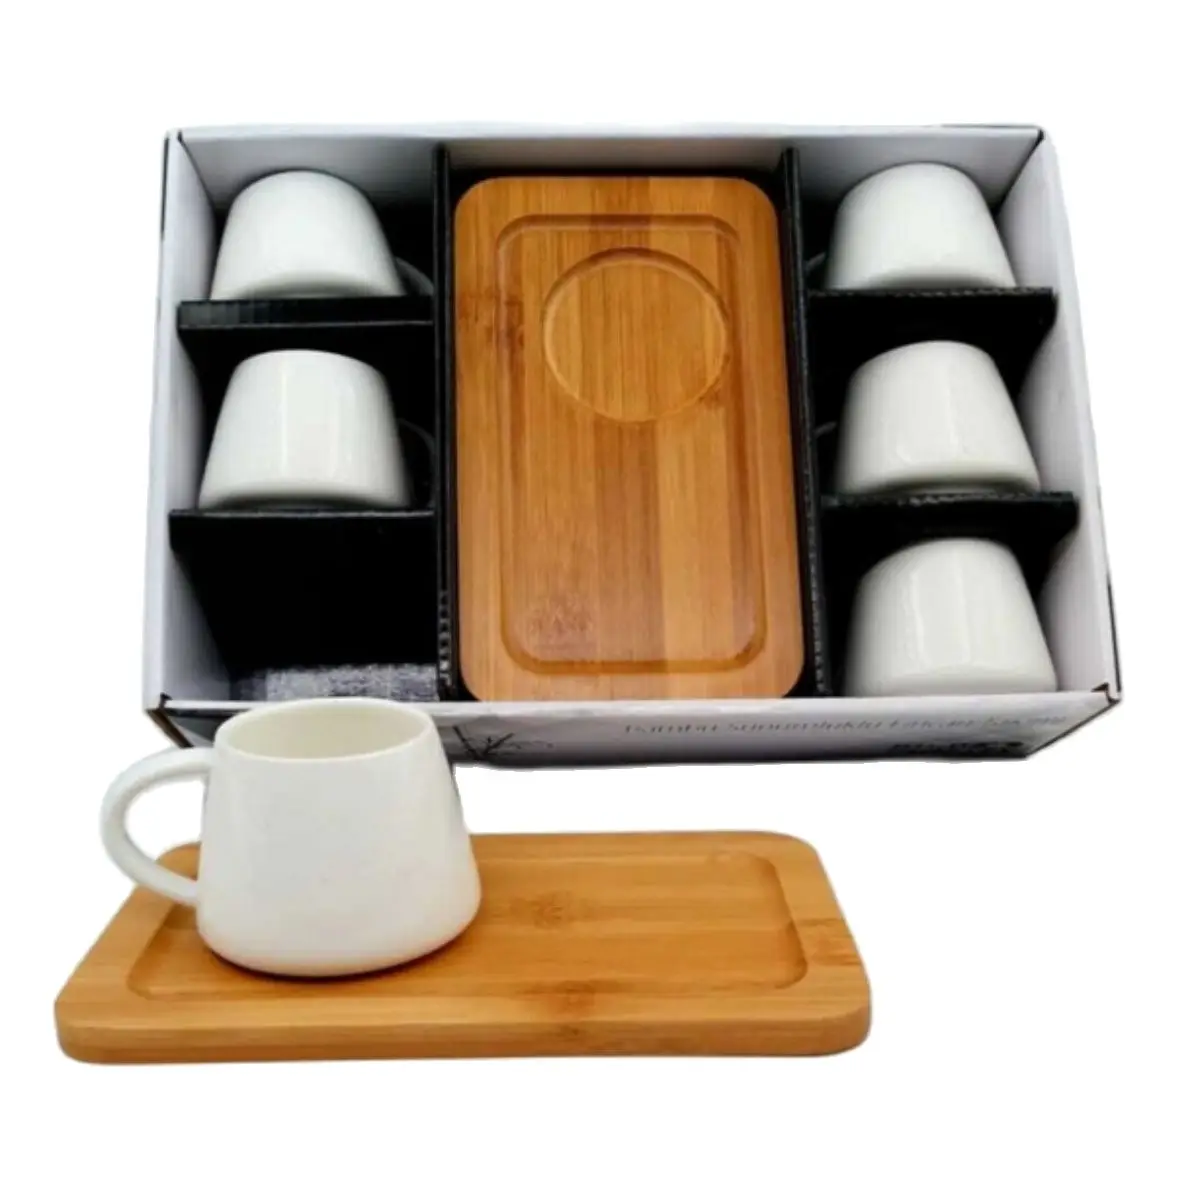 White Porcelain Bamboo Coffee Cup Set 6 Person Mug Stylish Tea Gift Hot Beverage Box Set Wooden Tray